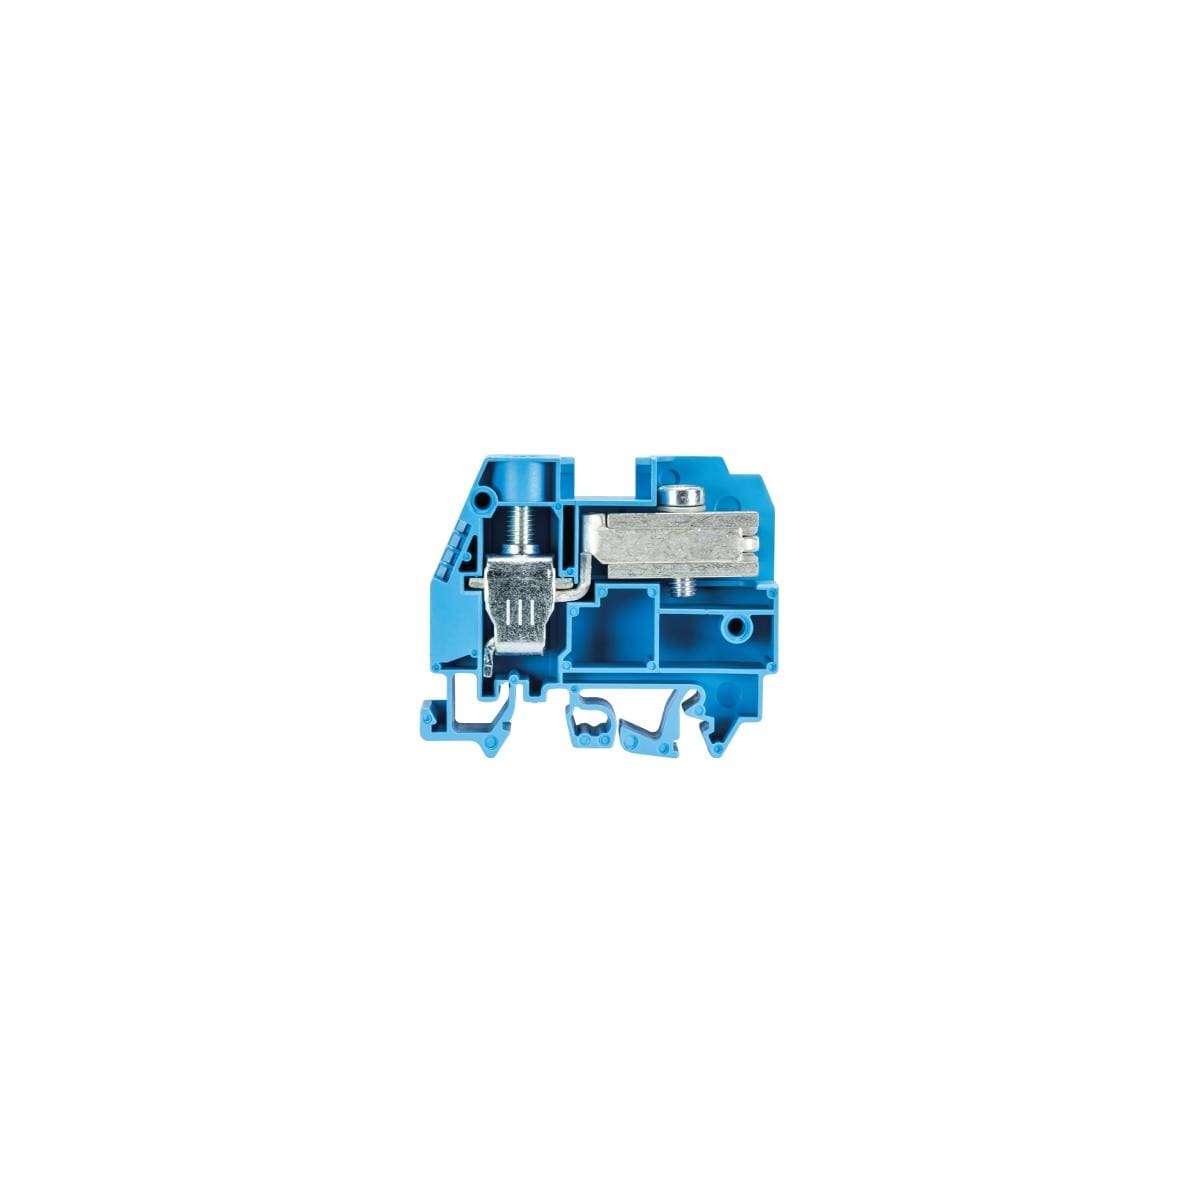 Wieland Electric NEUTRALLEITER-TRENNKLEMME WKI 16 ETK/U/V0, blau  (57.516.8255.0) Elektroshop Wagner